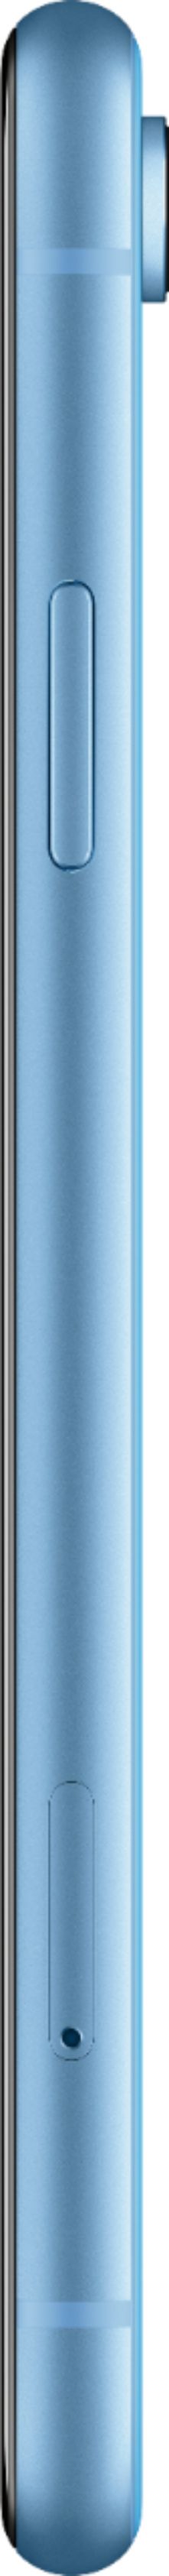 Best Buy: Apple iPhone XR 64GB Blue (Verizon) MRYX2LL/A